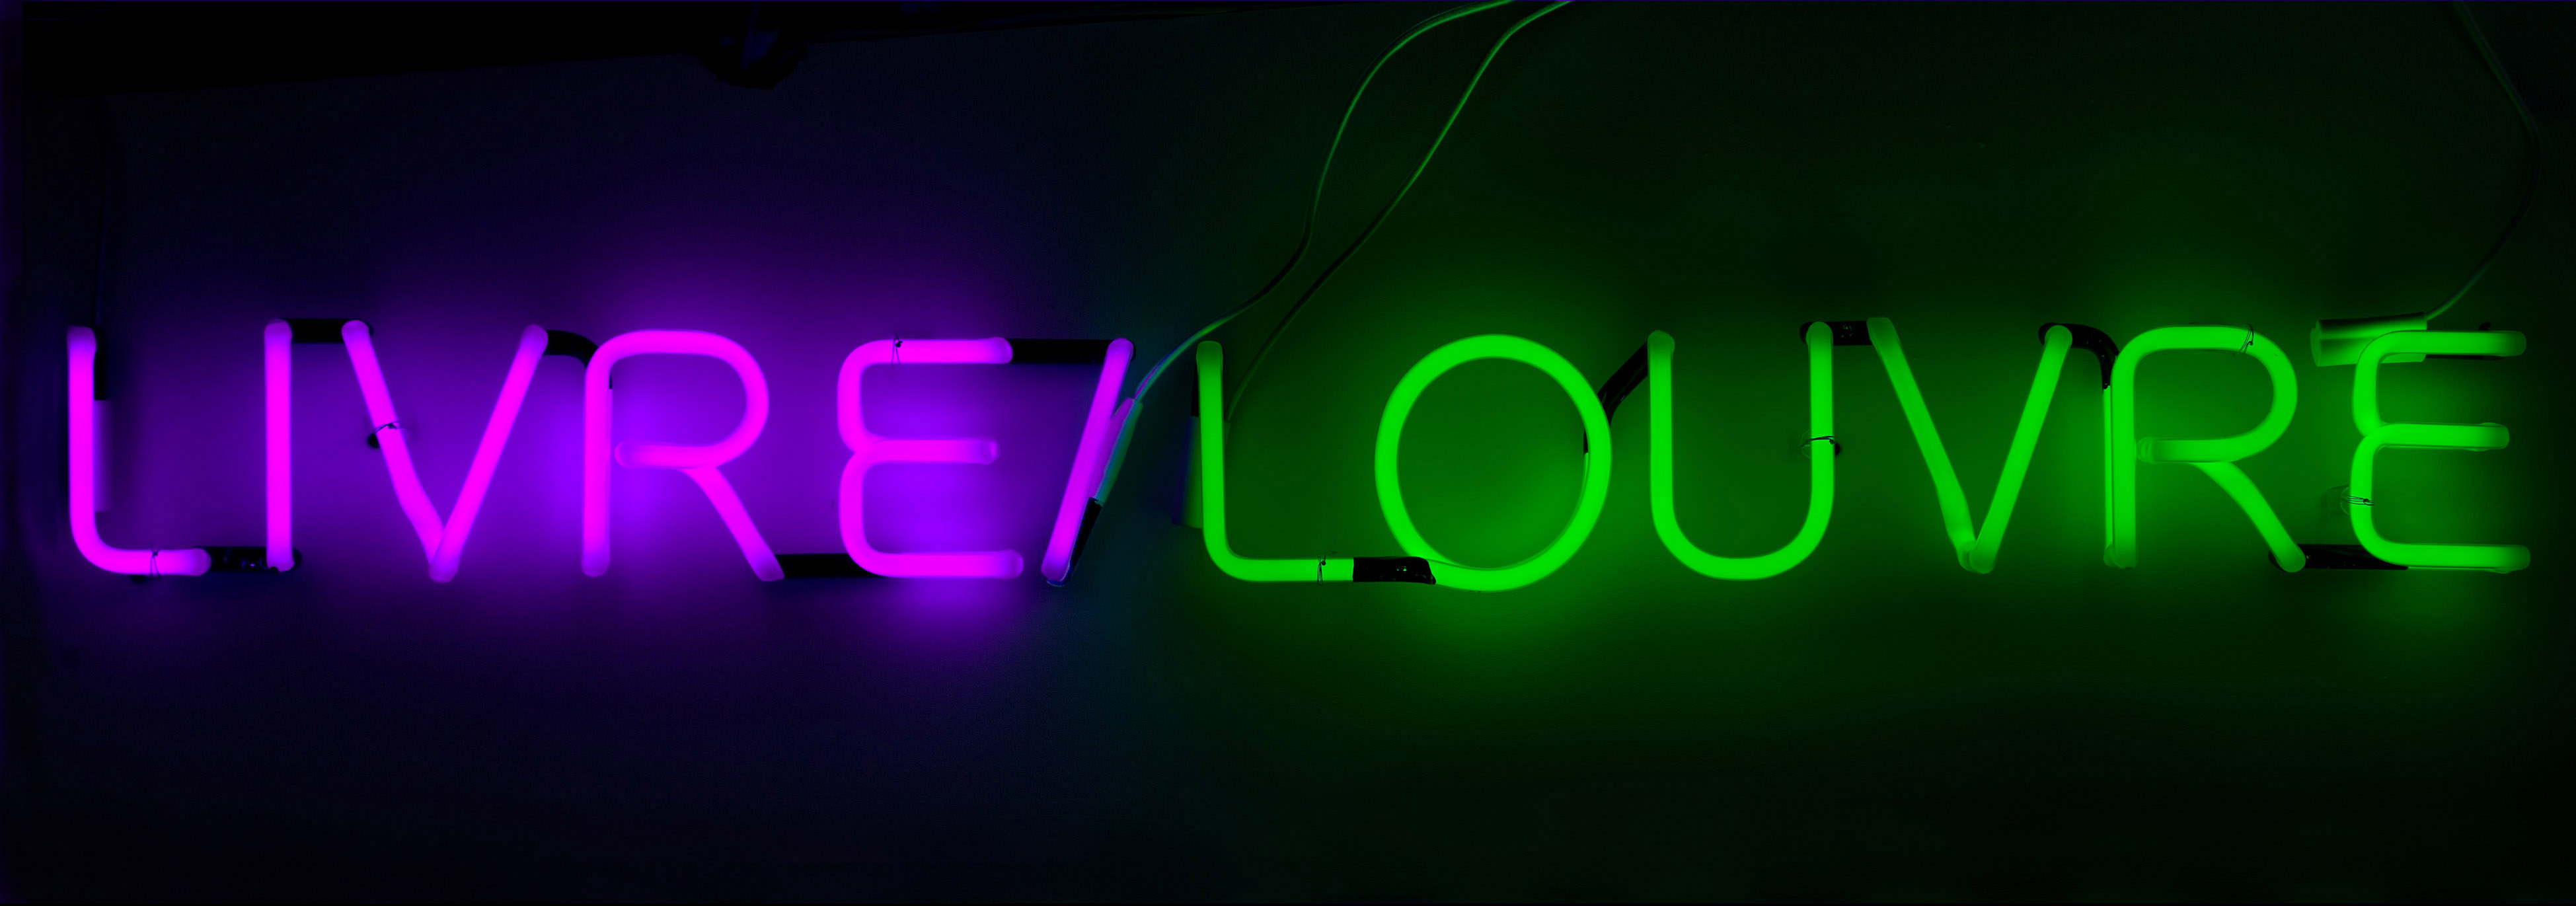 1-neon-livre-louvre